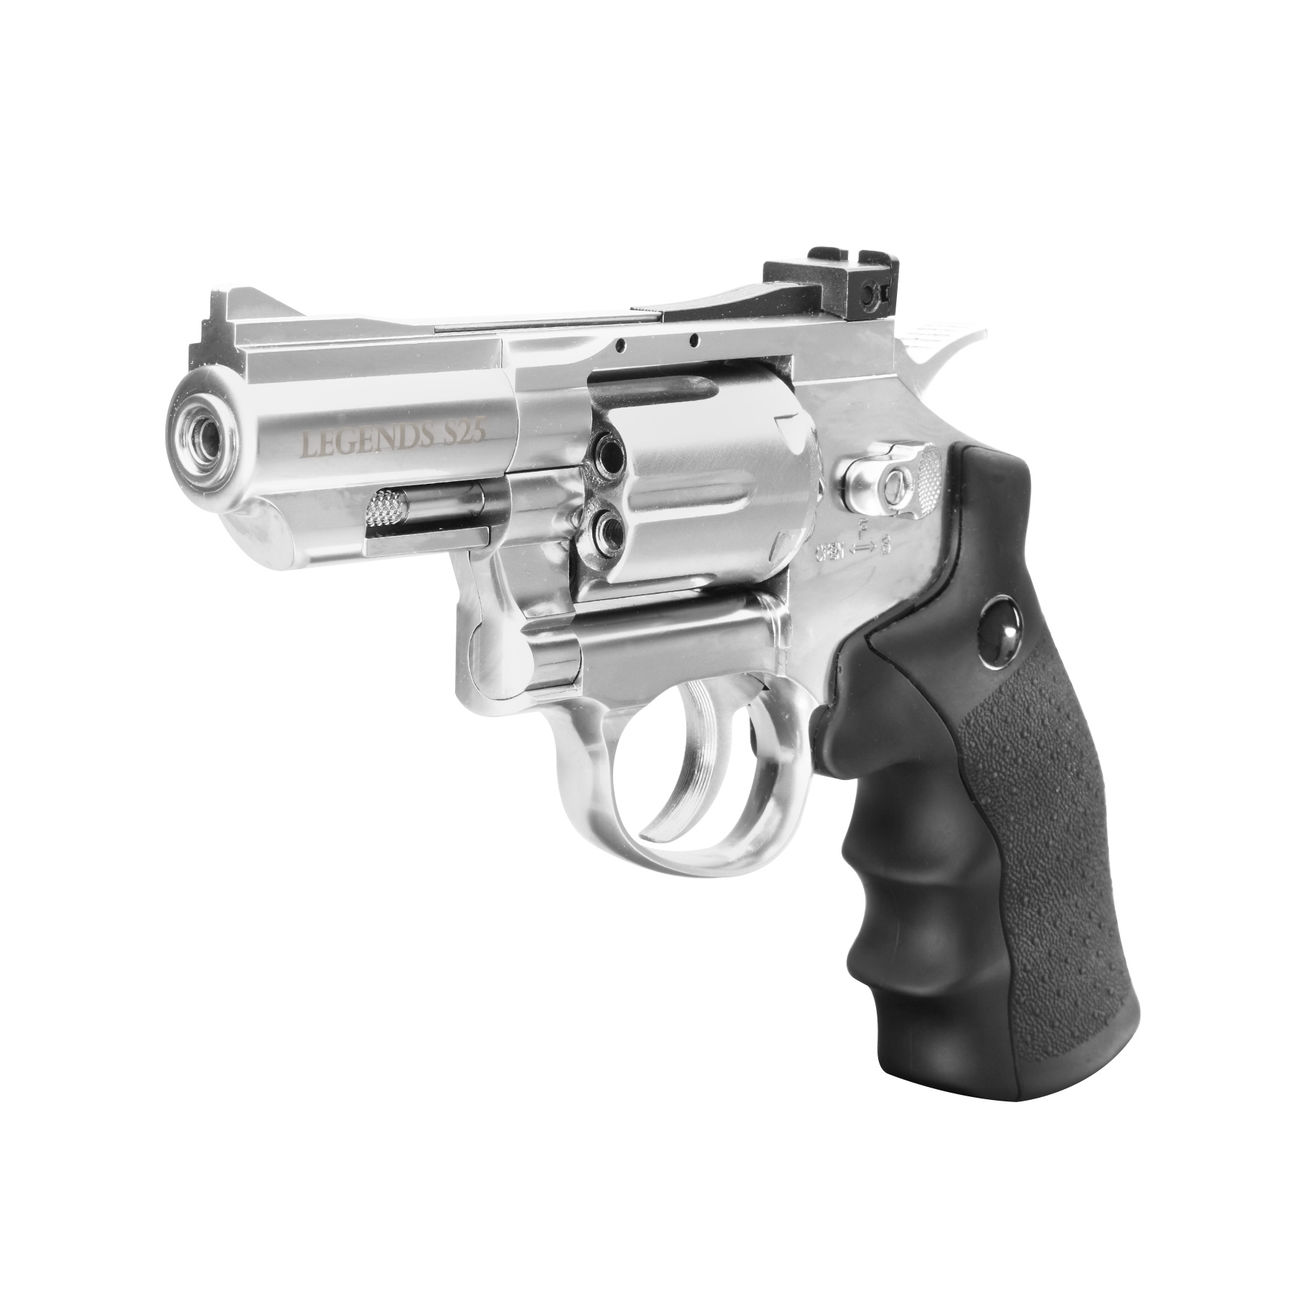 Legends S25 CO2 Revolver 2,5 Zoll Kal. 4,5mm Diabolo chrom Vollmetall Bild 1